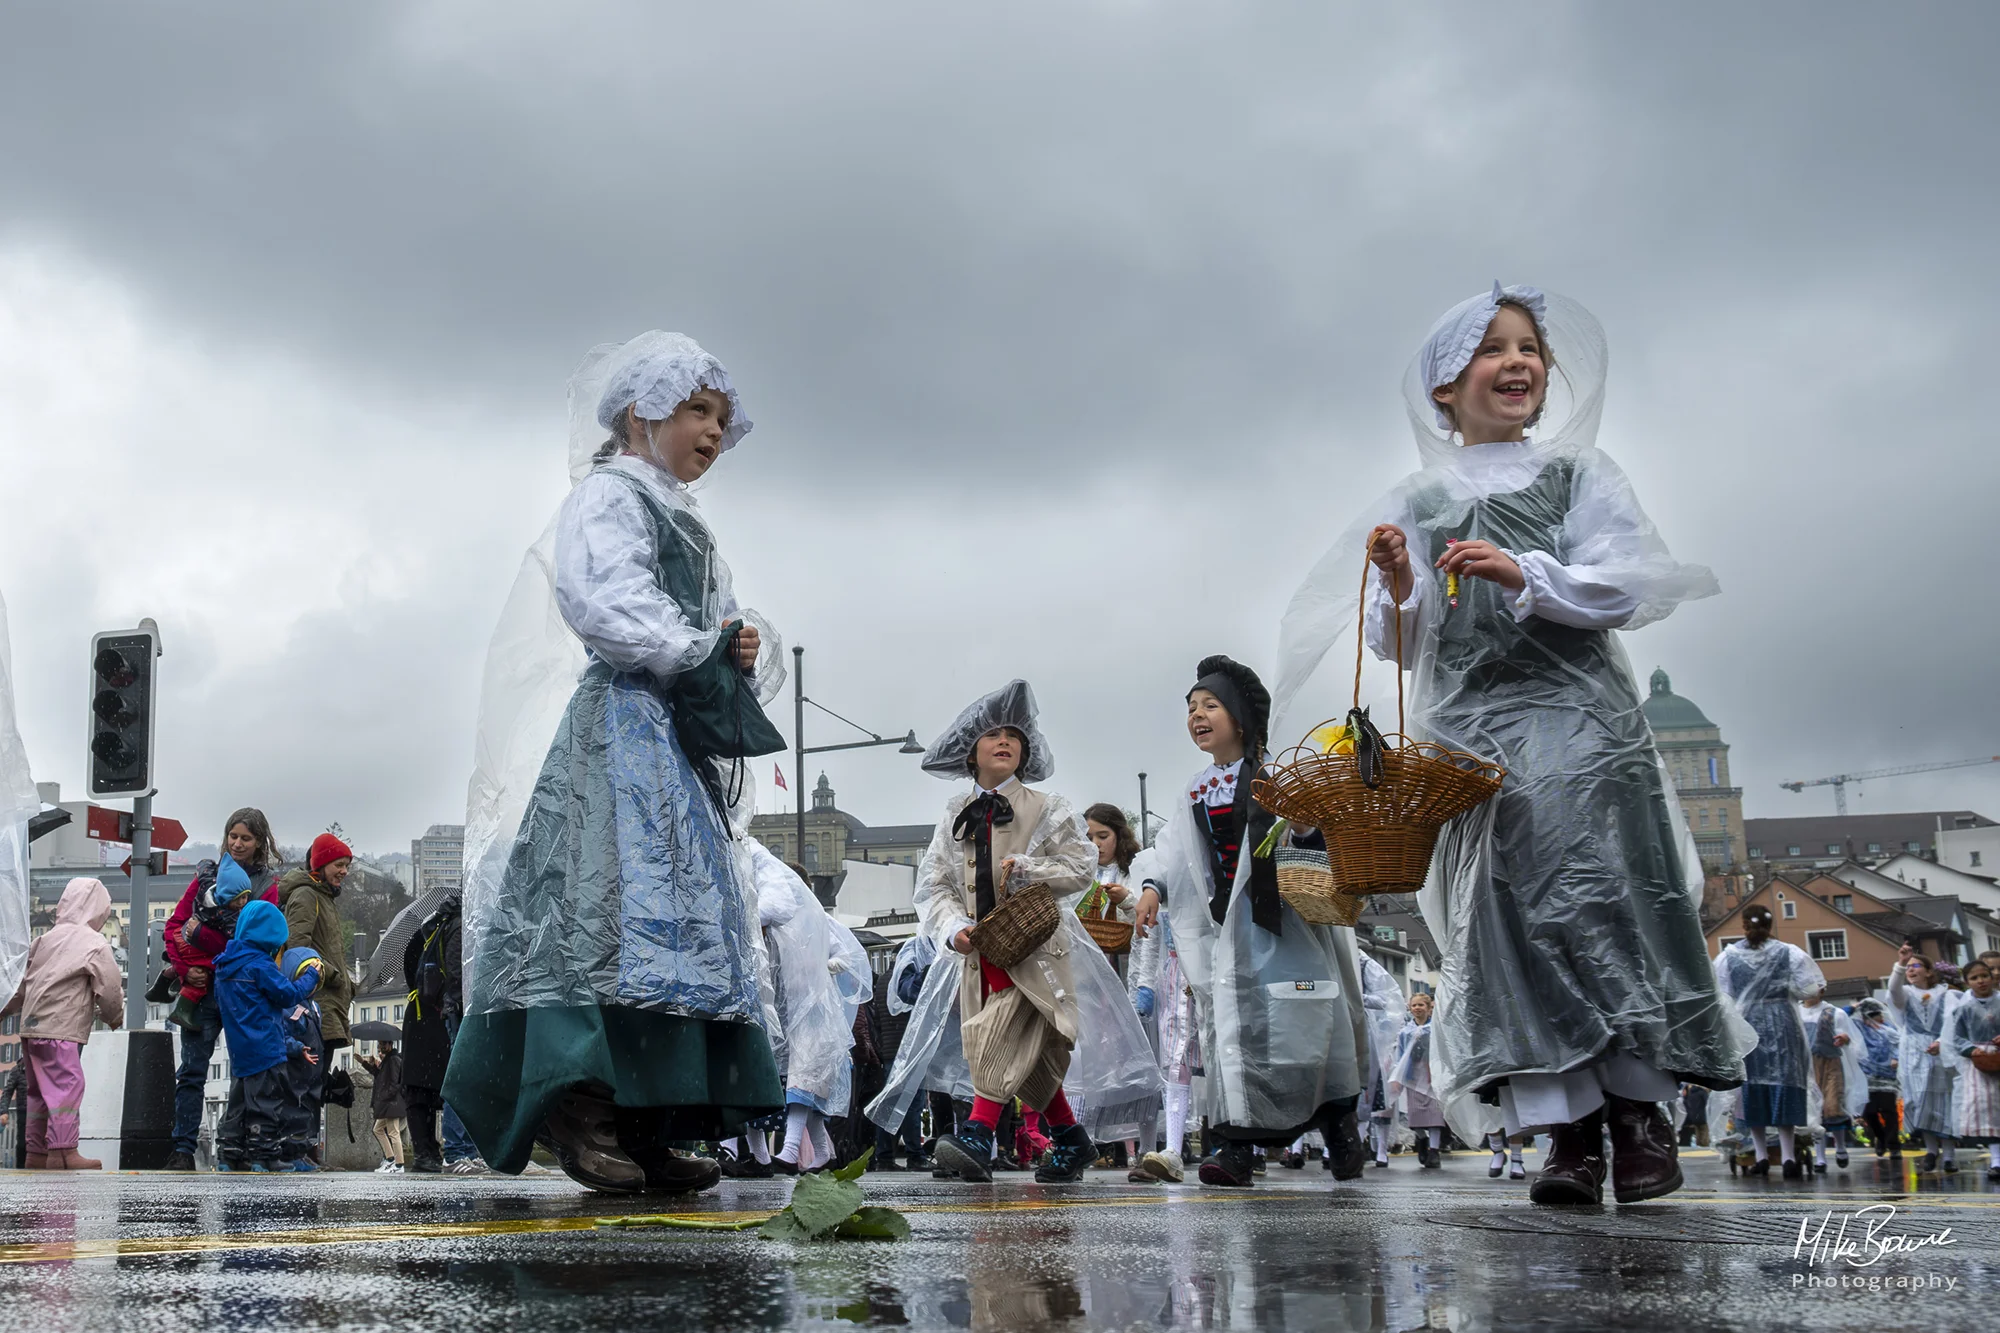 Laughing children wearing plastic coats in the rain at Sechseläuten parade